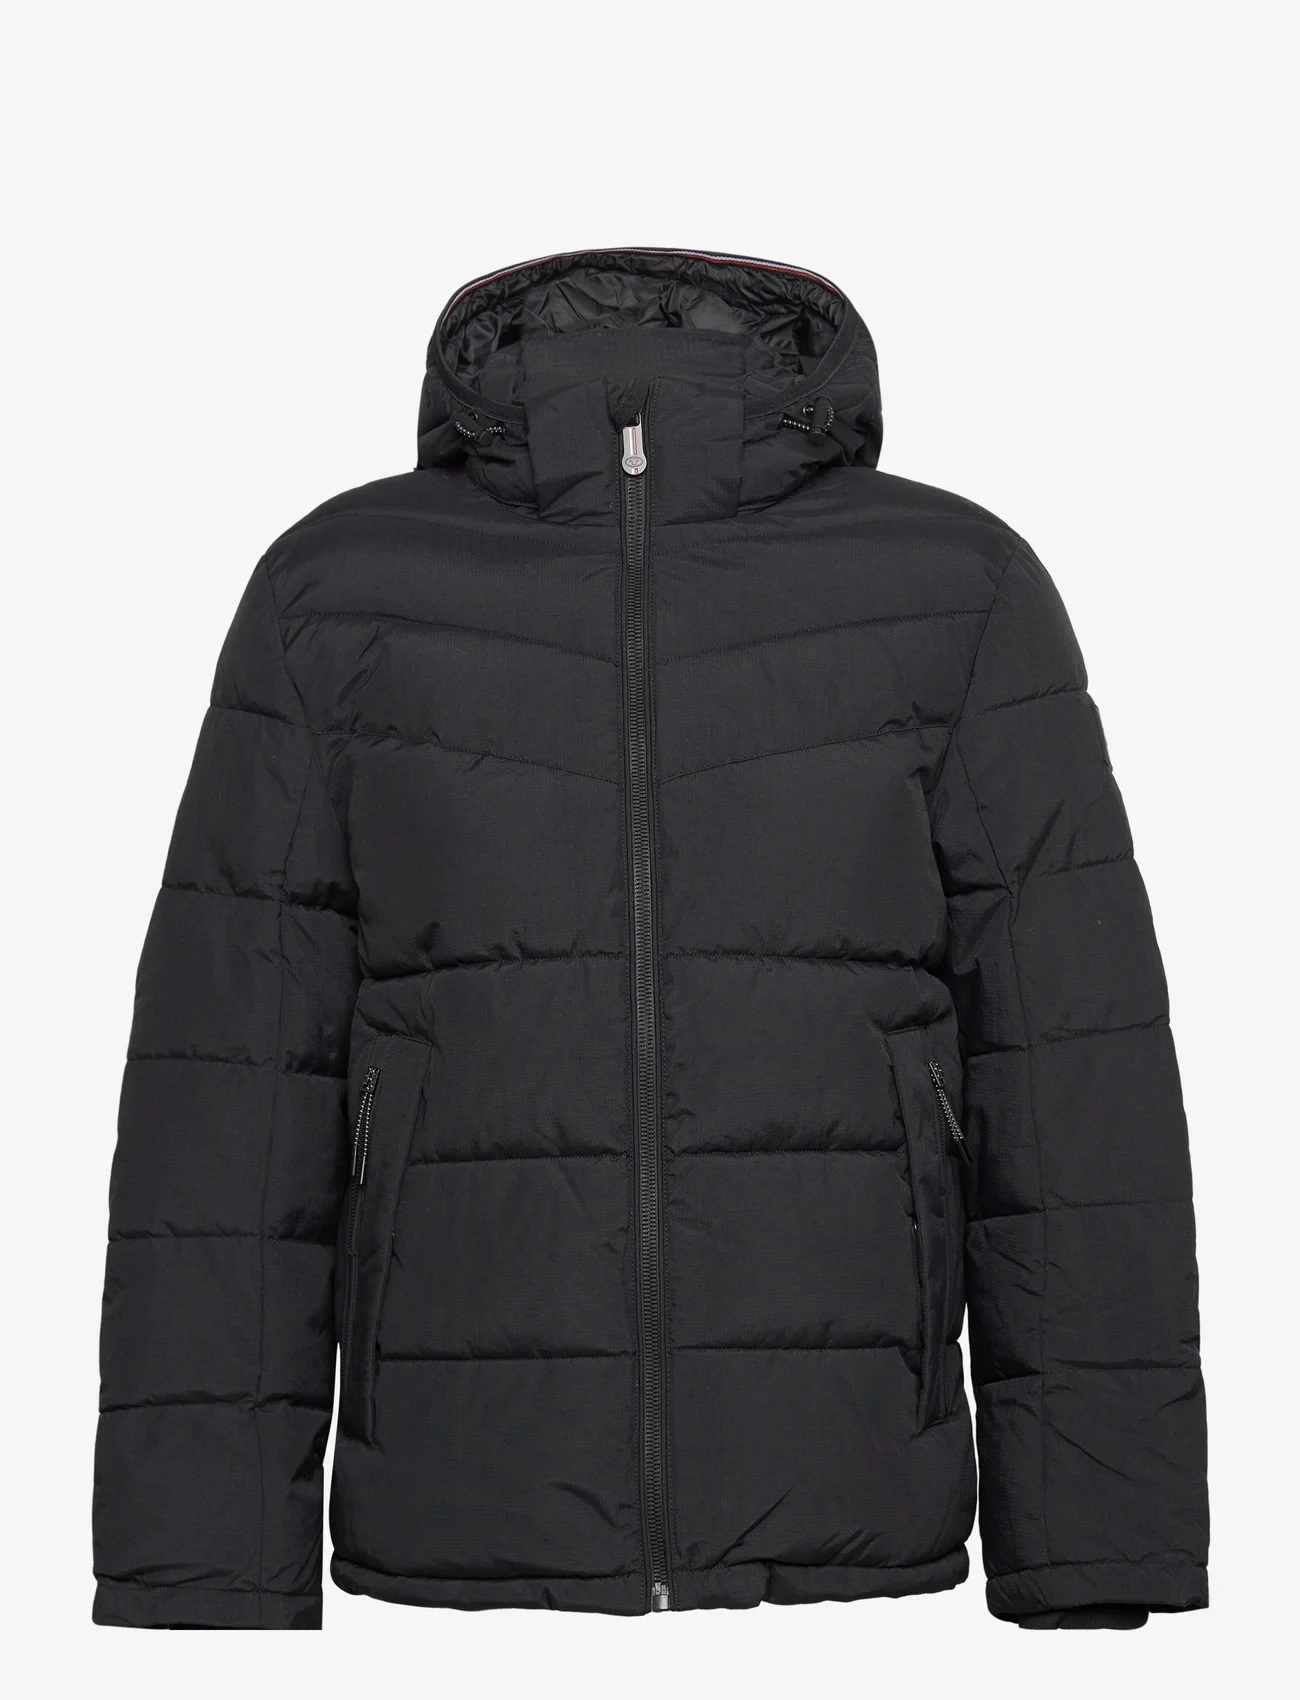 Tom Tailor - puffer jacket with hood - winterjacken - black - 0